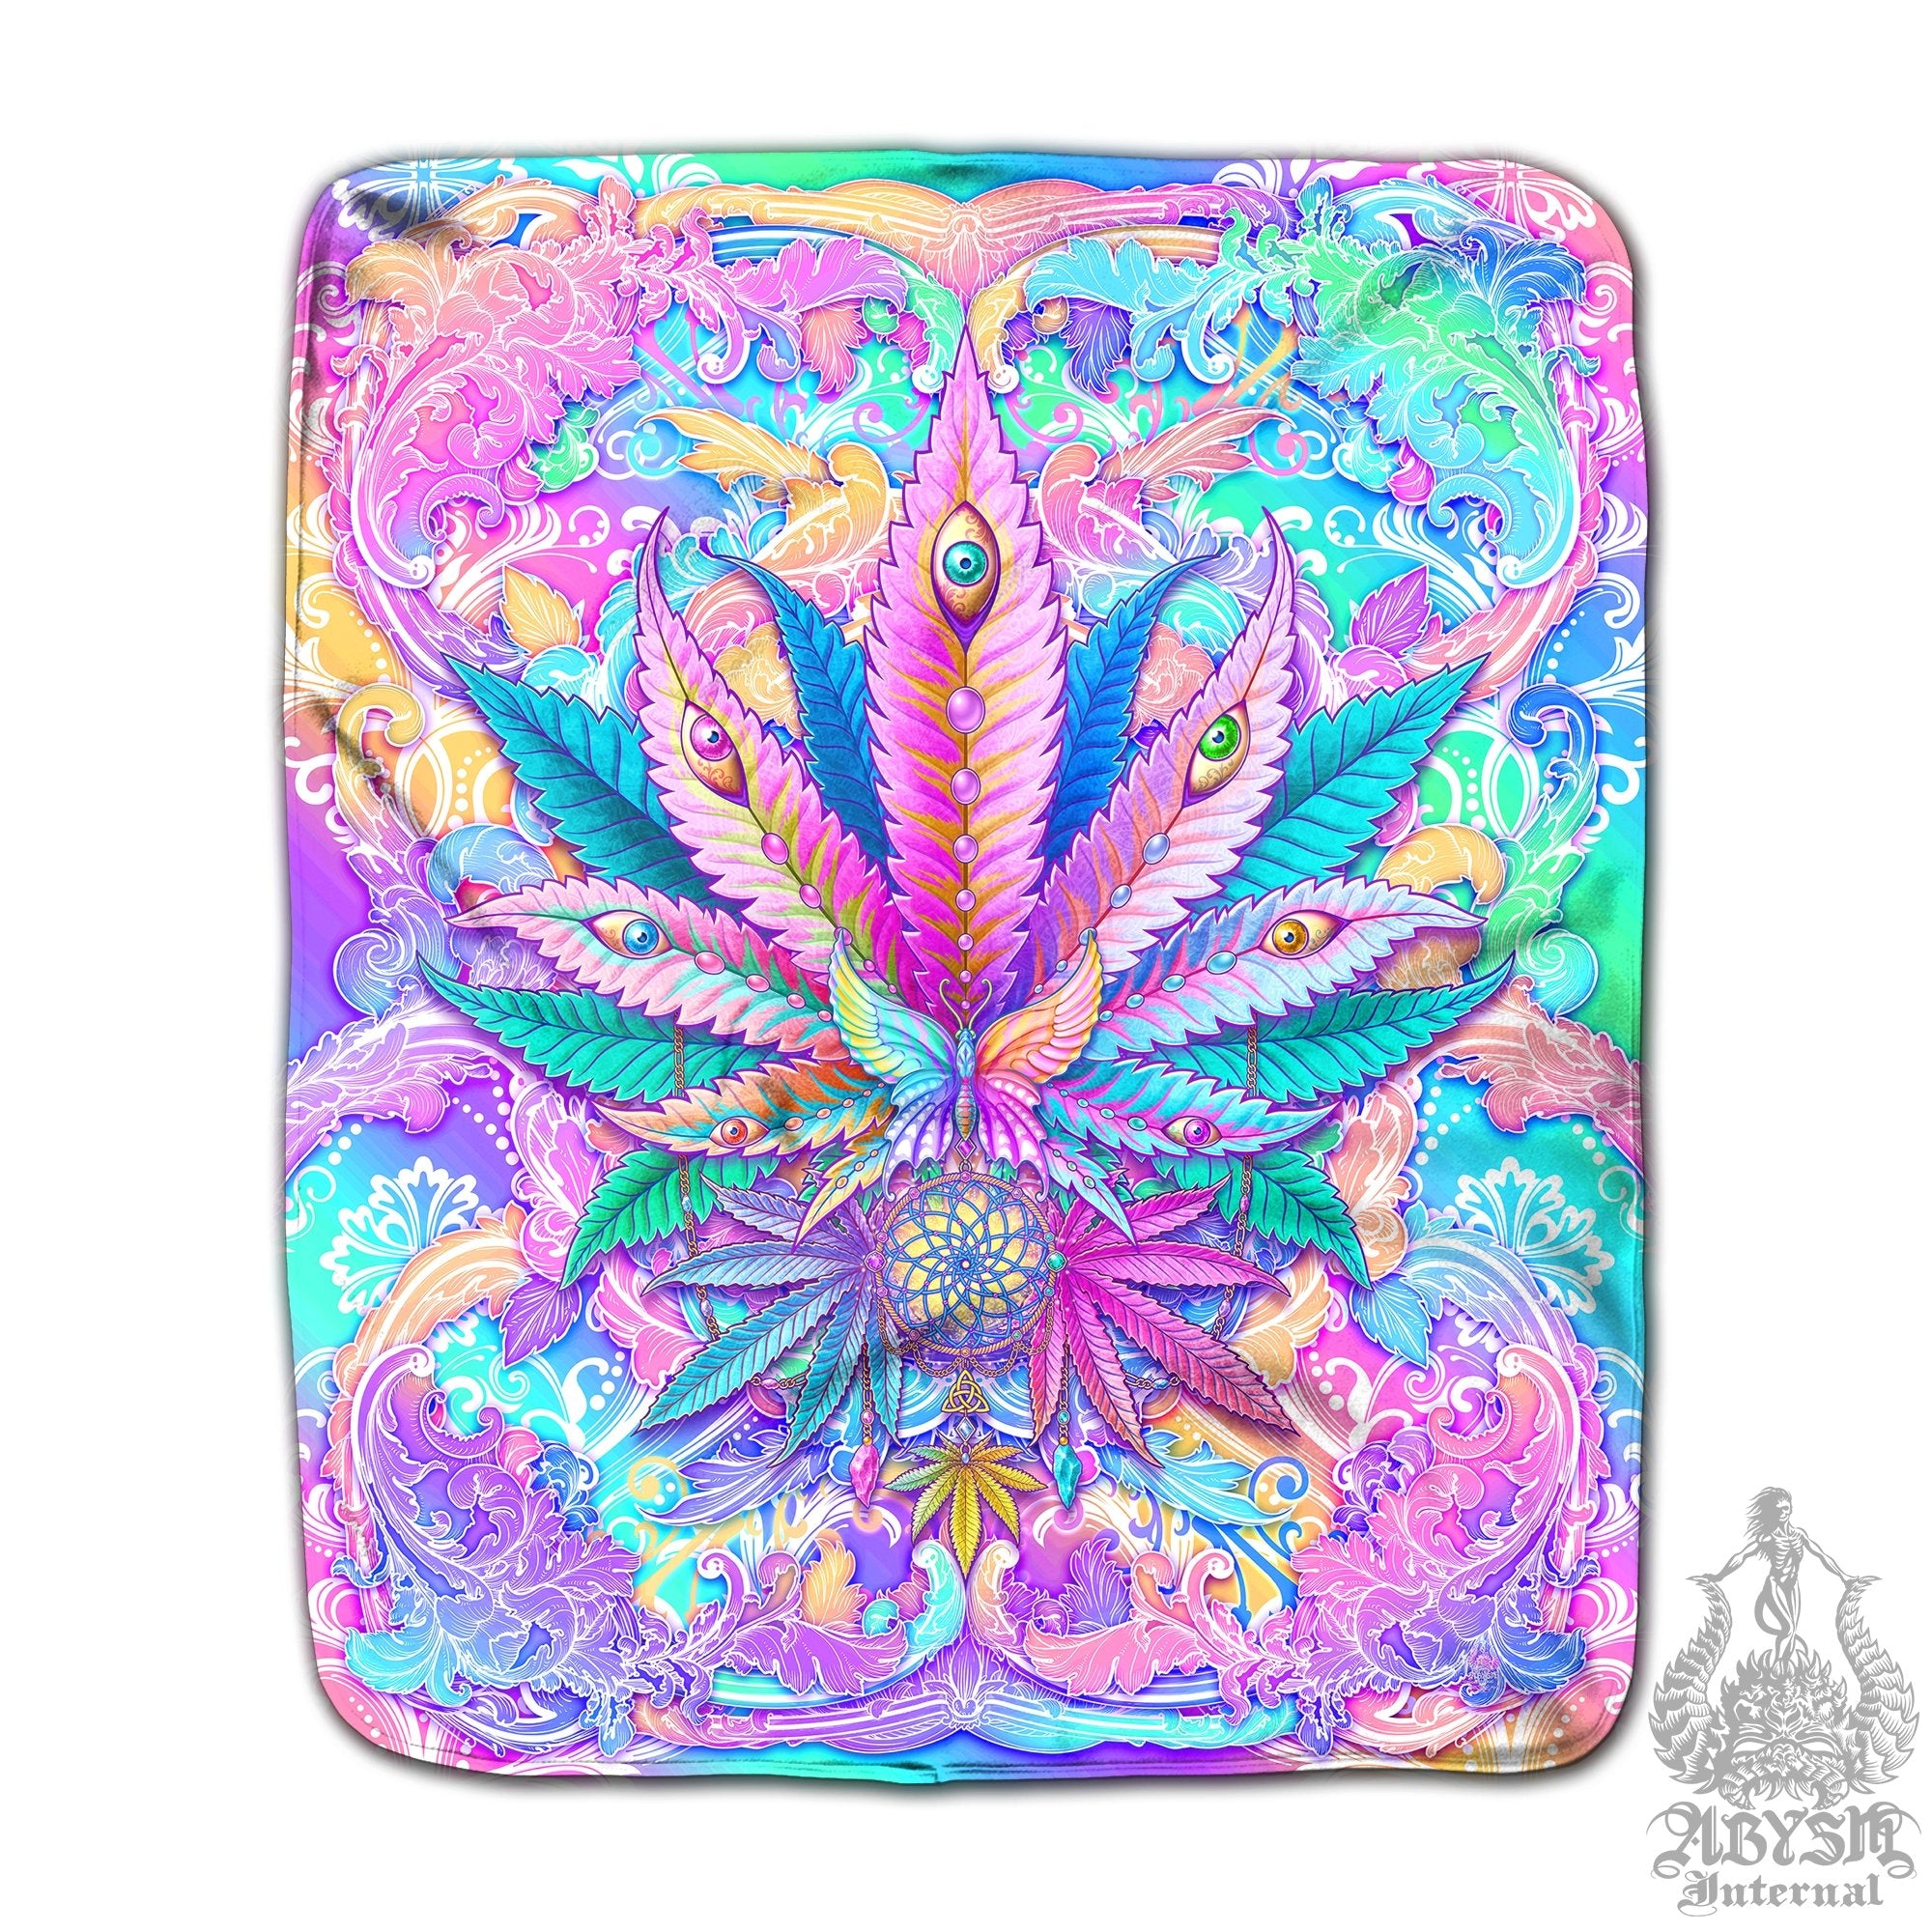 Psychedelic Weed Throw Fleece Blanket, Aesthetic Cannabis Art, Indie and Hippie Home Decor, 420 Gift - Marijuana, Pastel - Abysm Internal